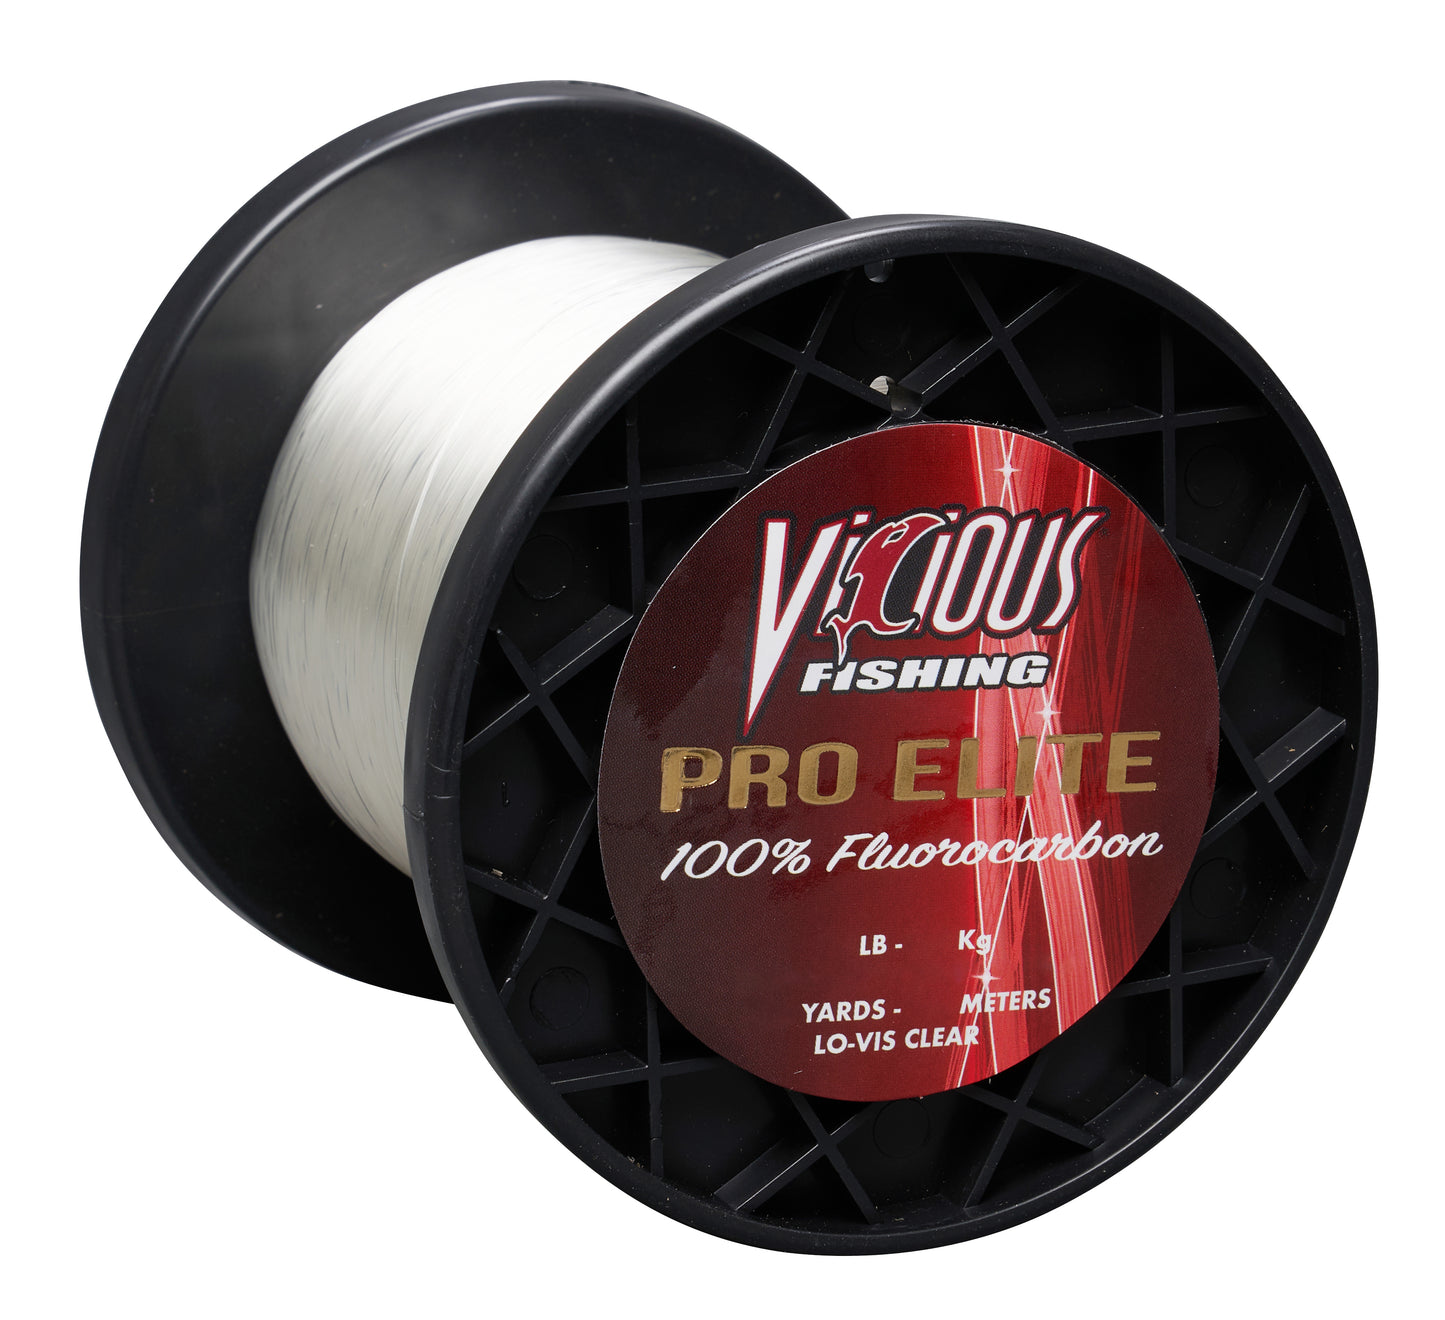 Vicious Pro Elite 100% Japanese Fluorocarbon - 800 Yards